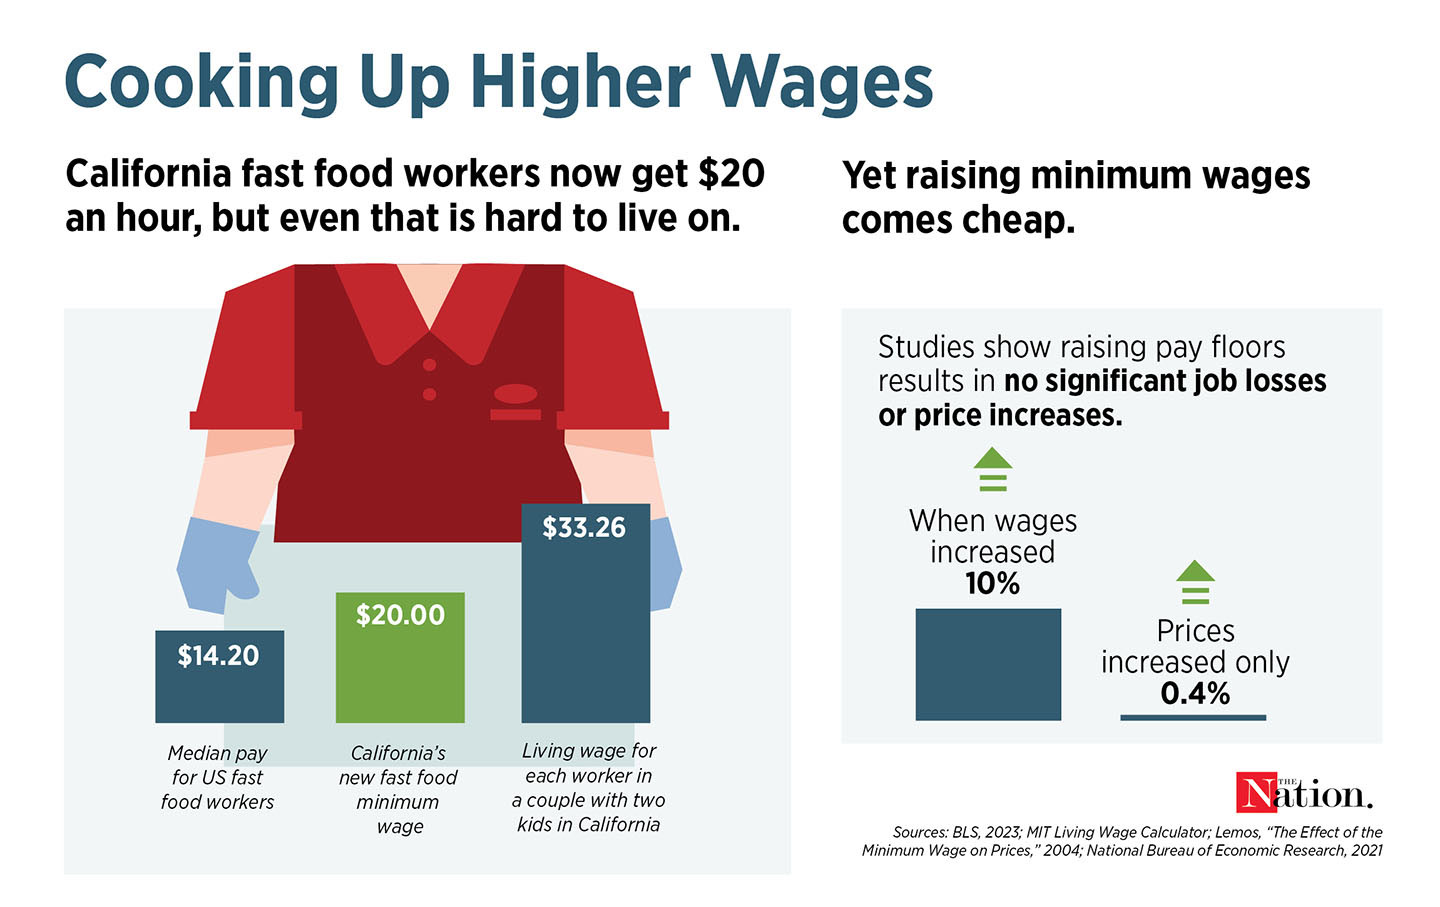 Raising the Minimum Wage Comes Cheap